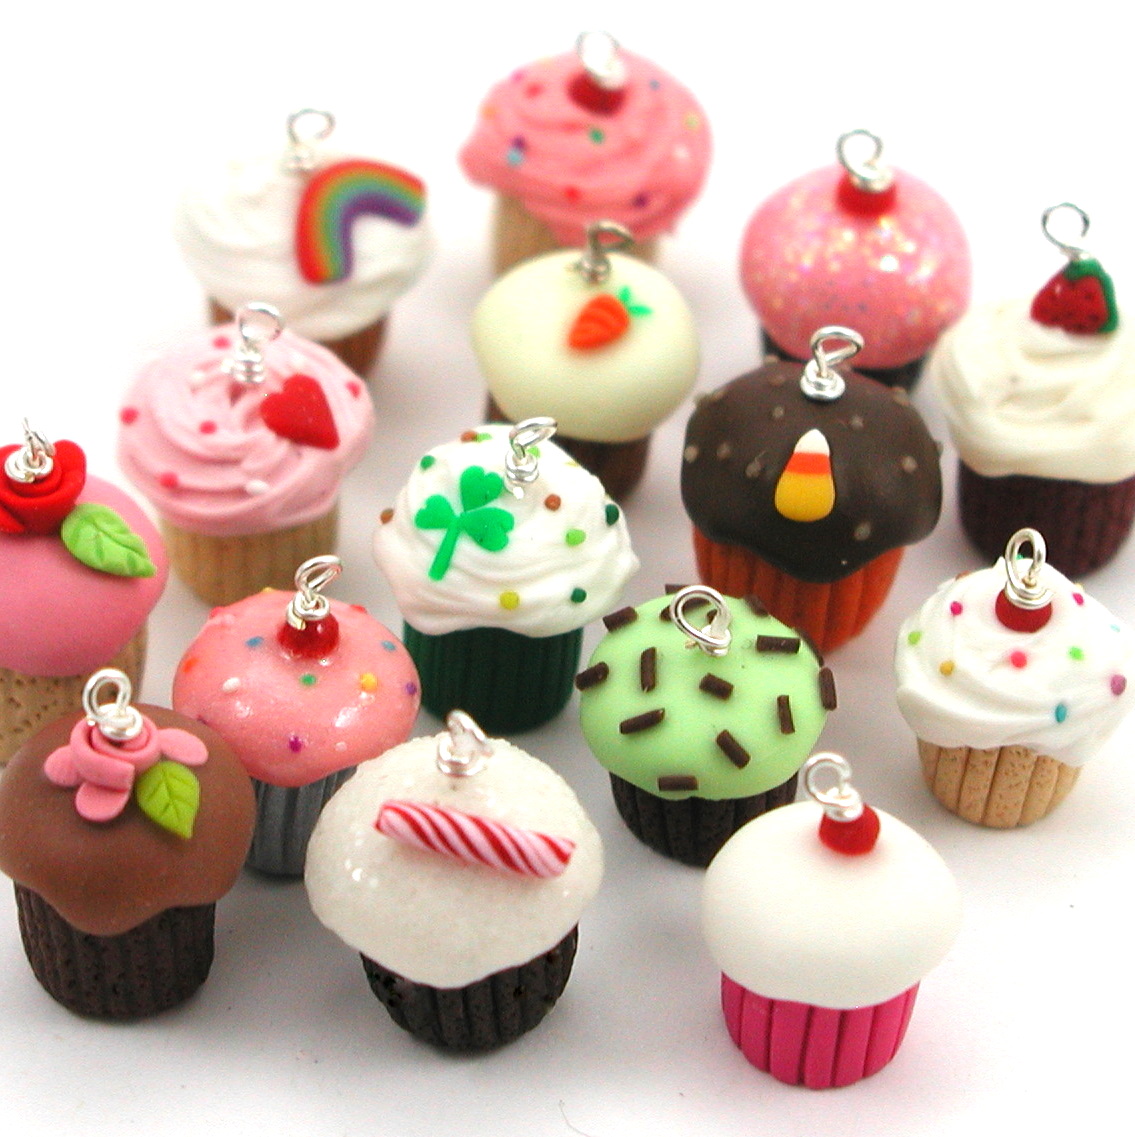 wedding cupcake designs | Cupcakes!